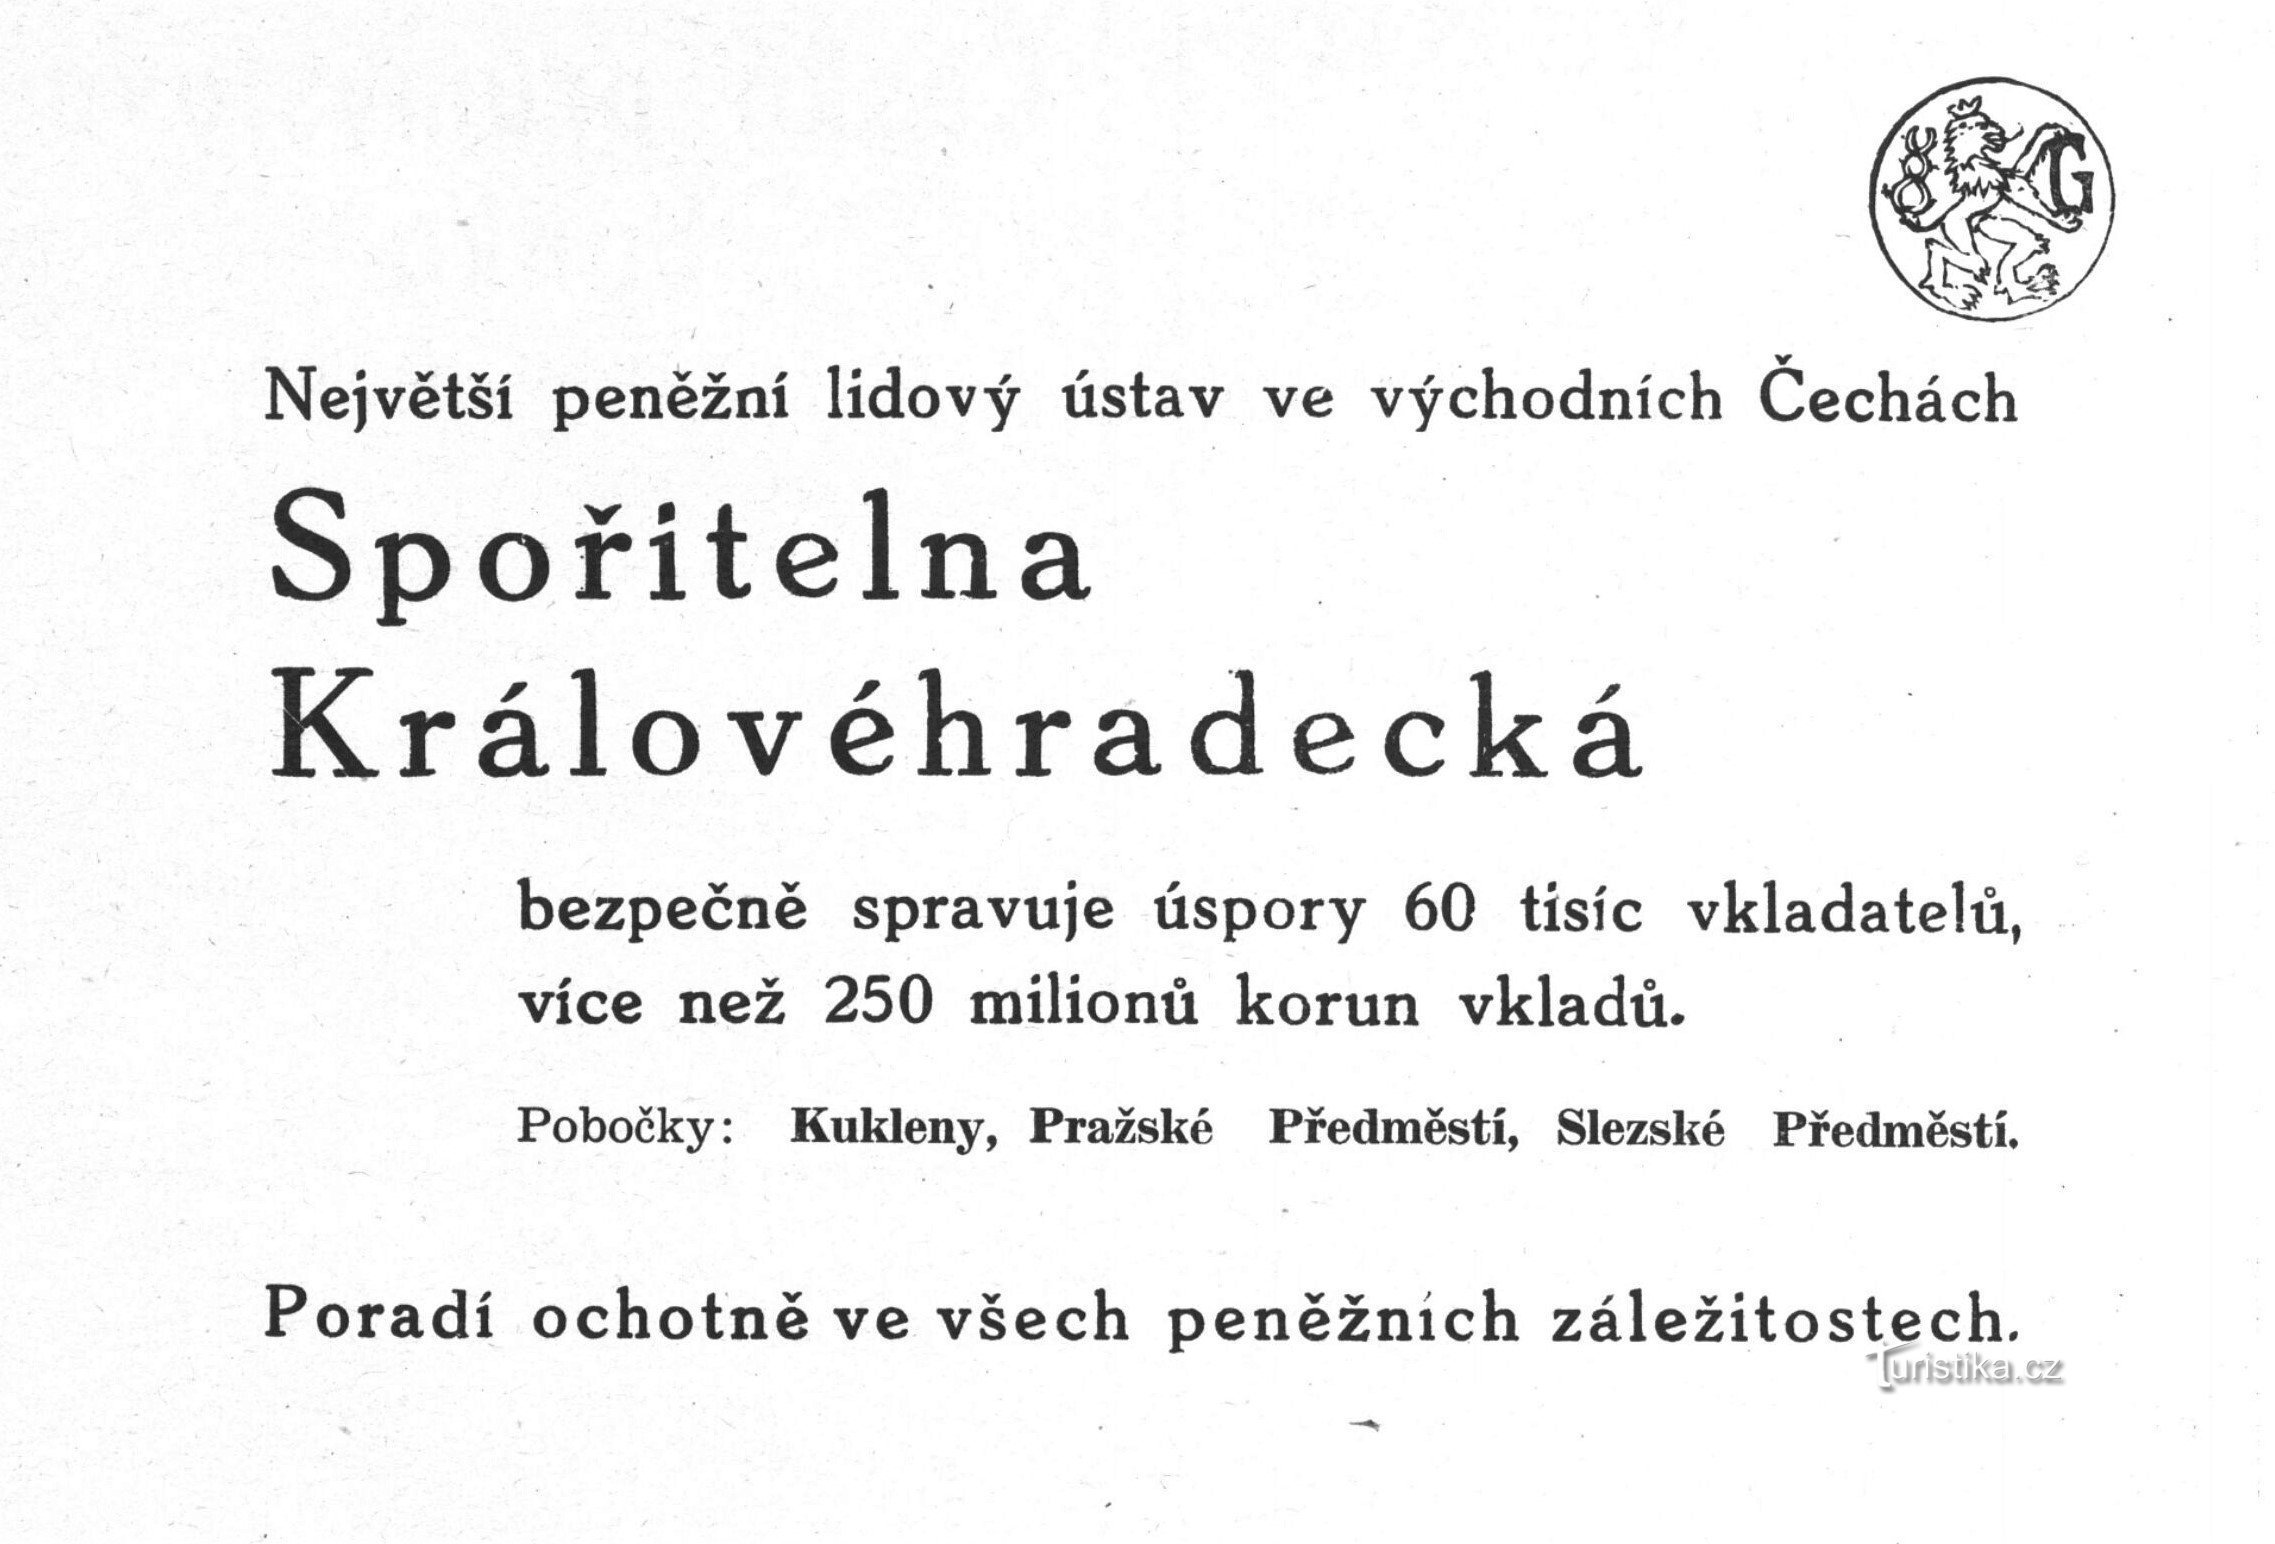 Quảng cáo của Spořitelna Královéhradecké từ năm 1941